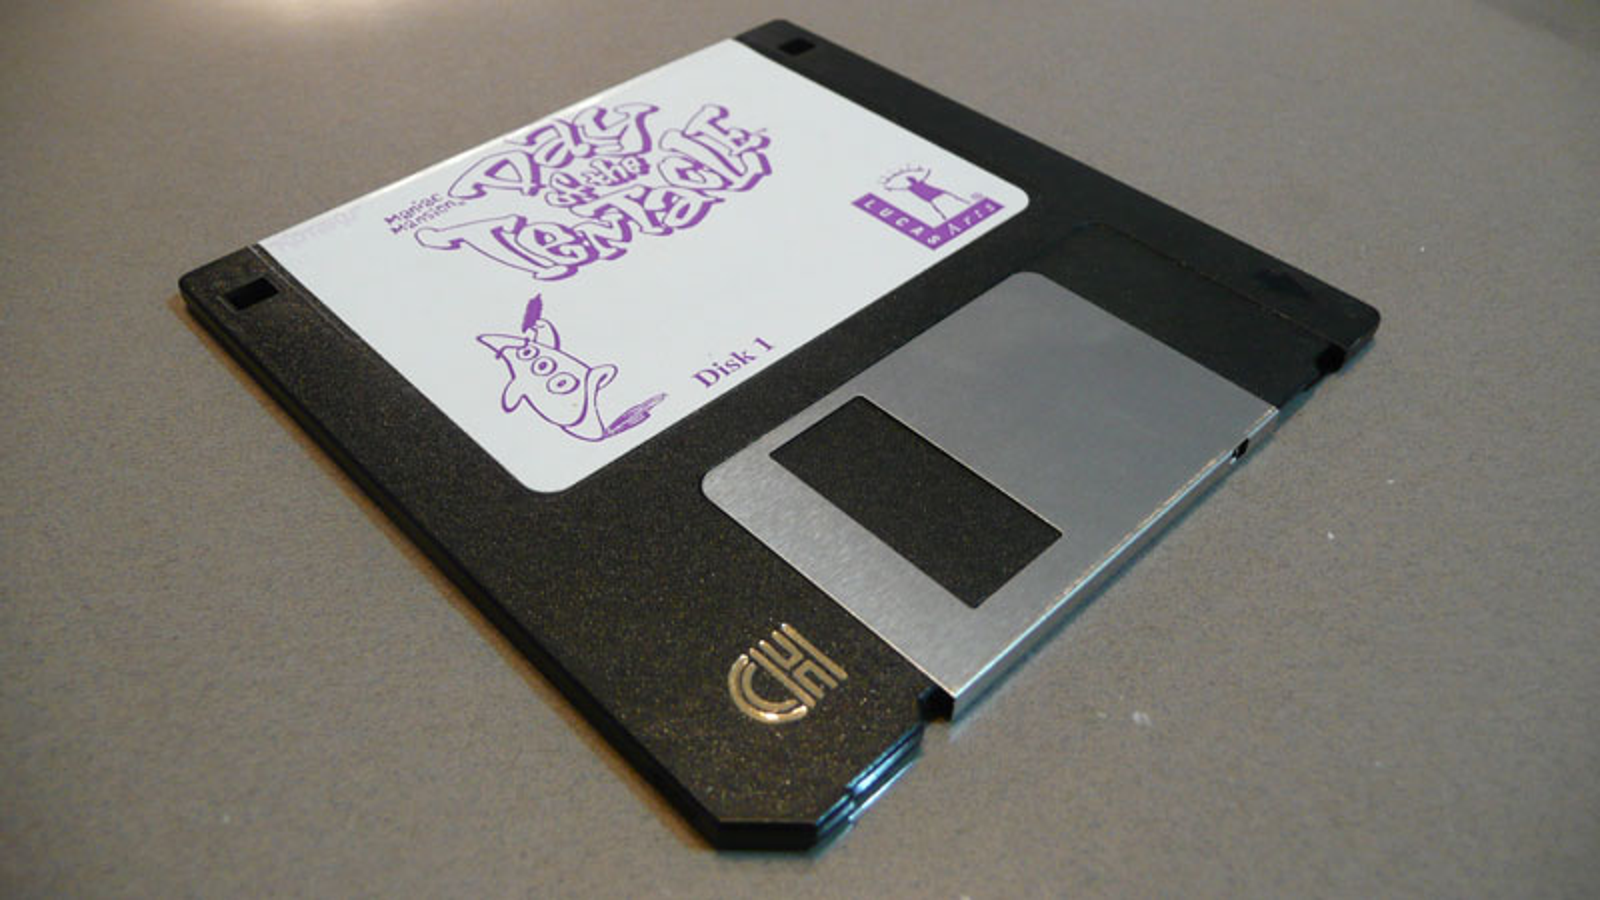 floppy disk image creator